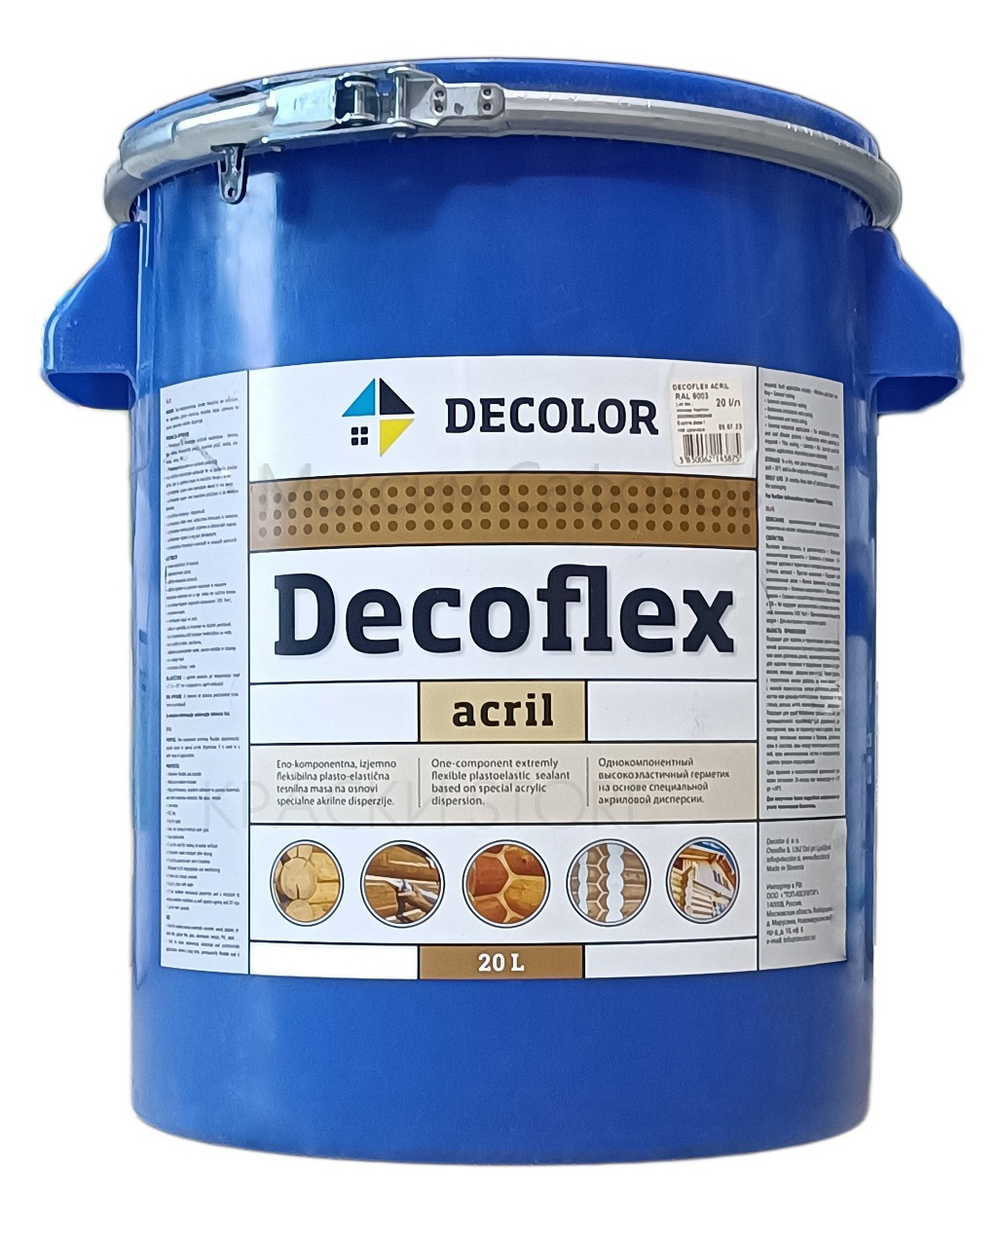 Decoflex Acryl Деколор Декофлекс Акриловый герметик для дерева